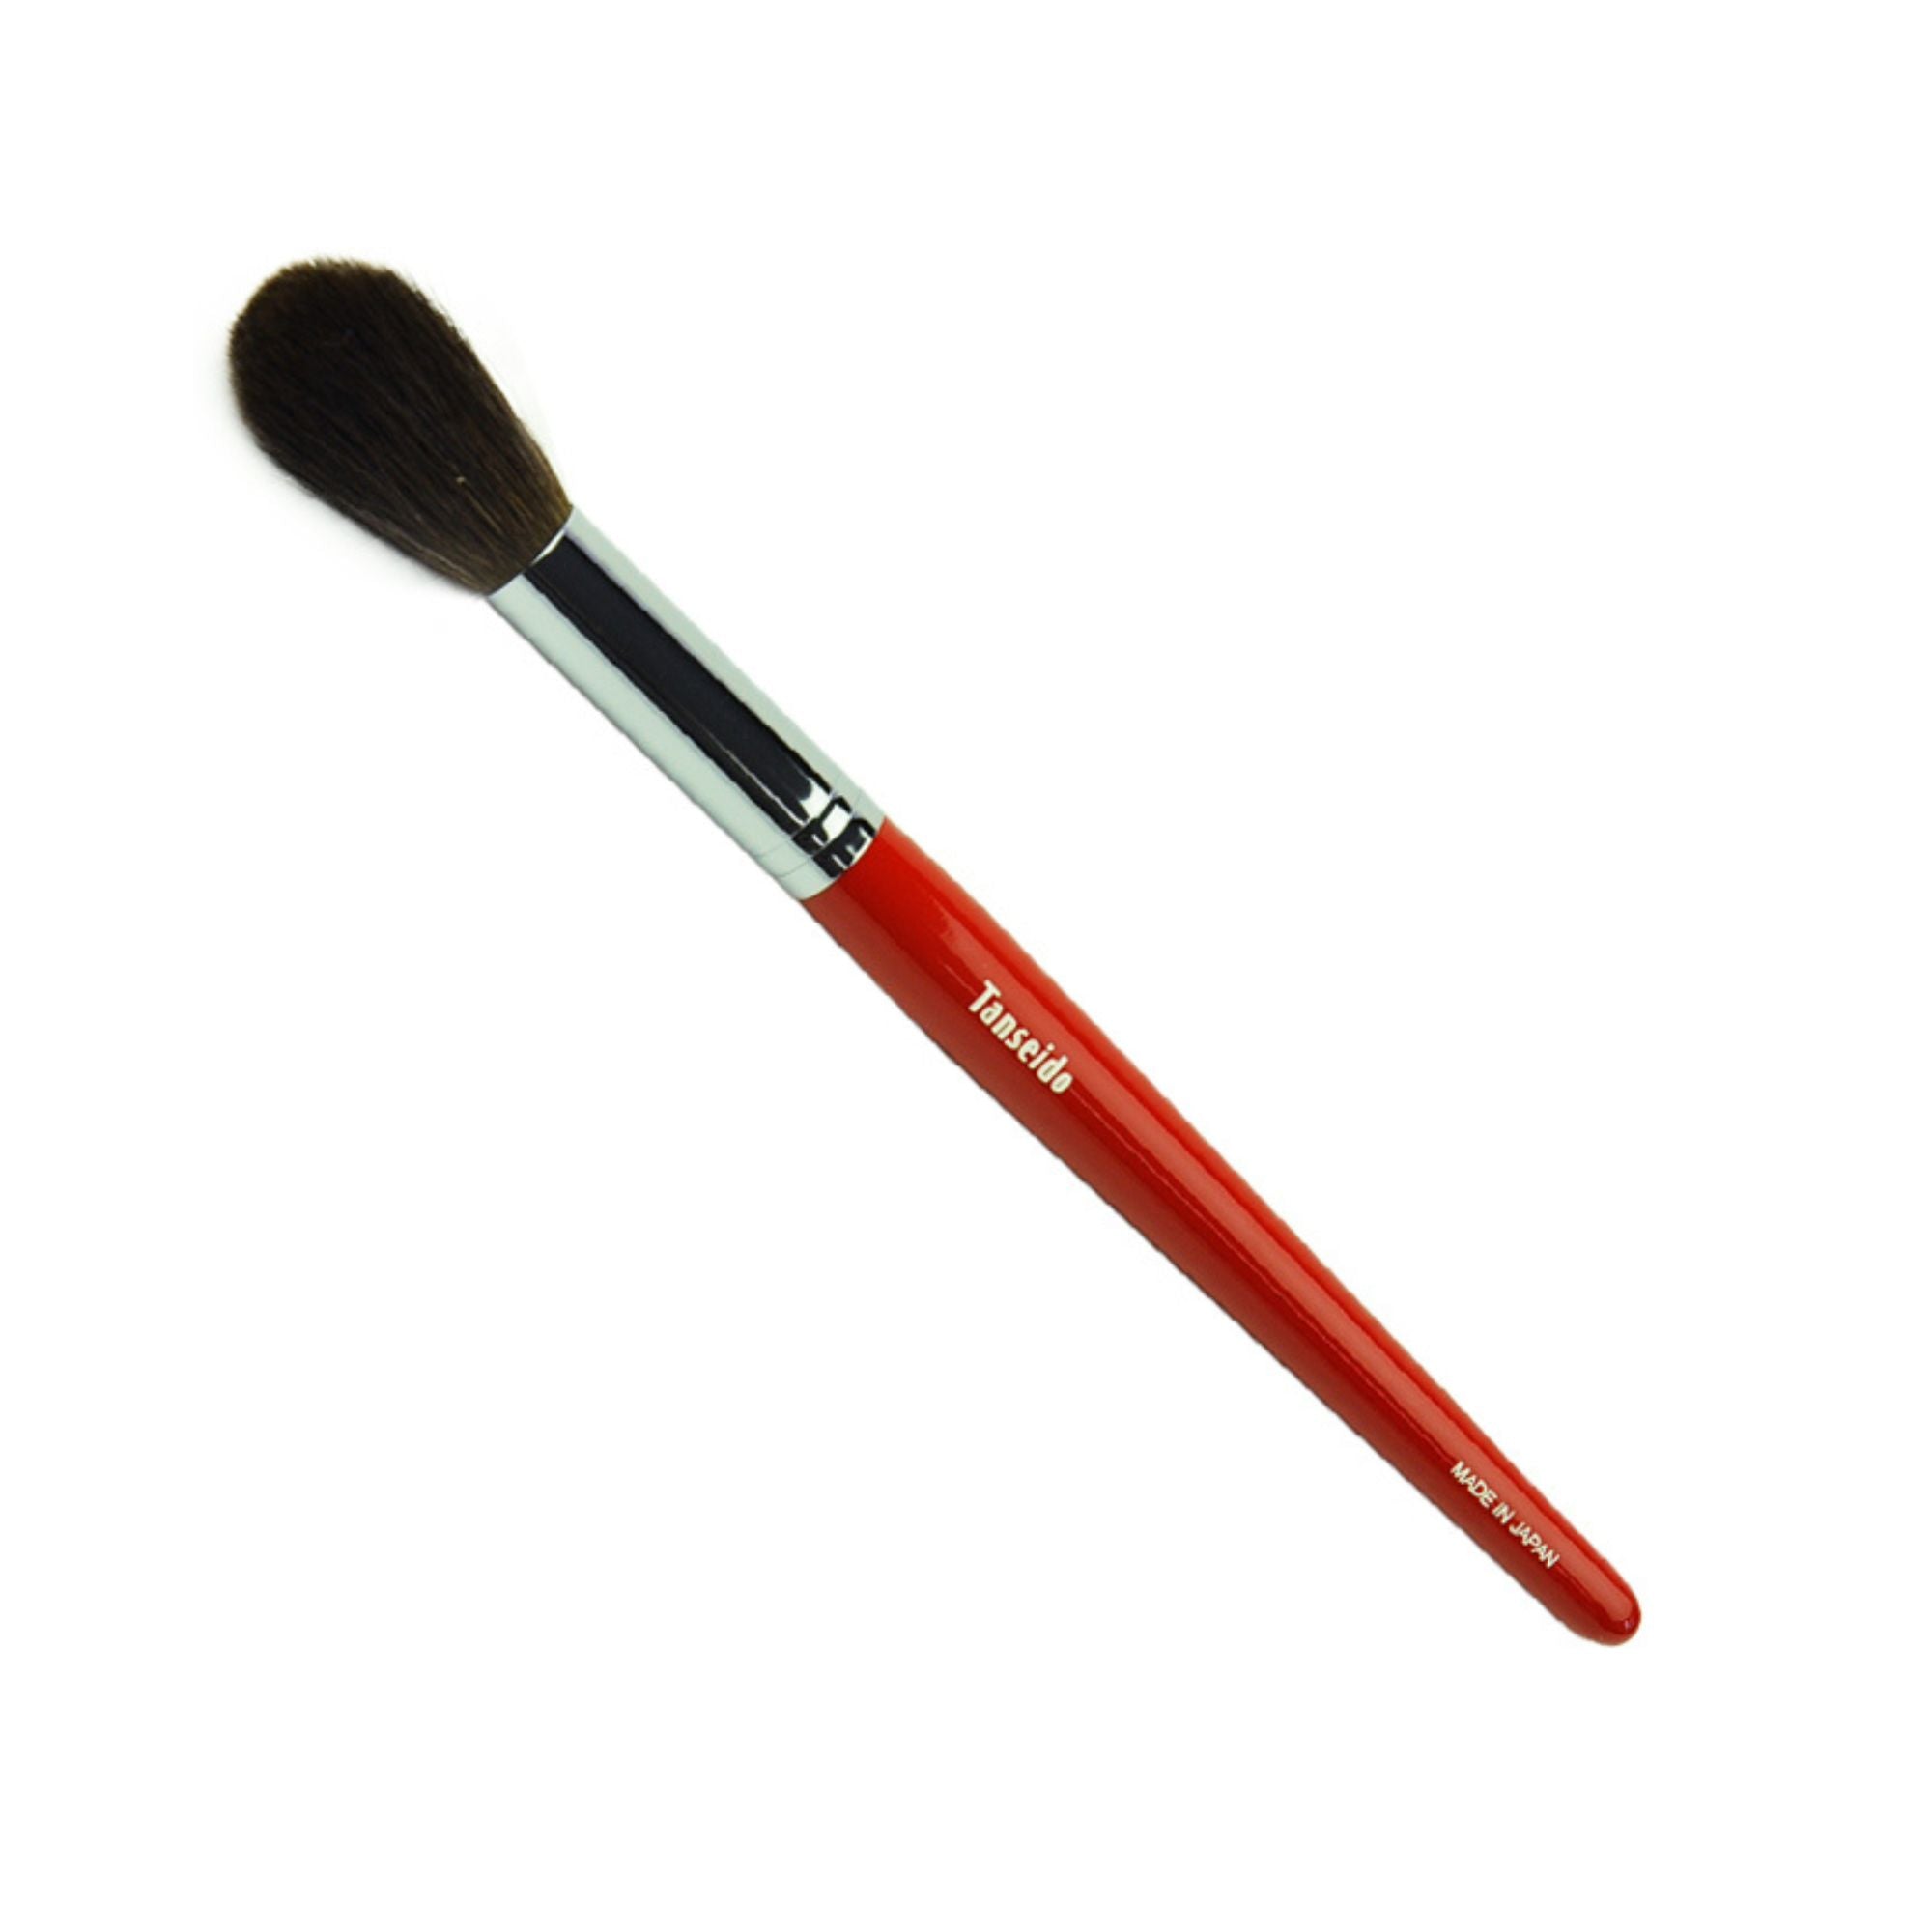 Tanseido YSC17 Cheek Brush - Fude Beauty, Japanese Makeup Brushes